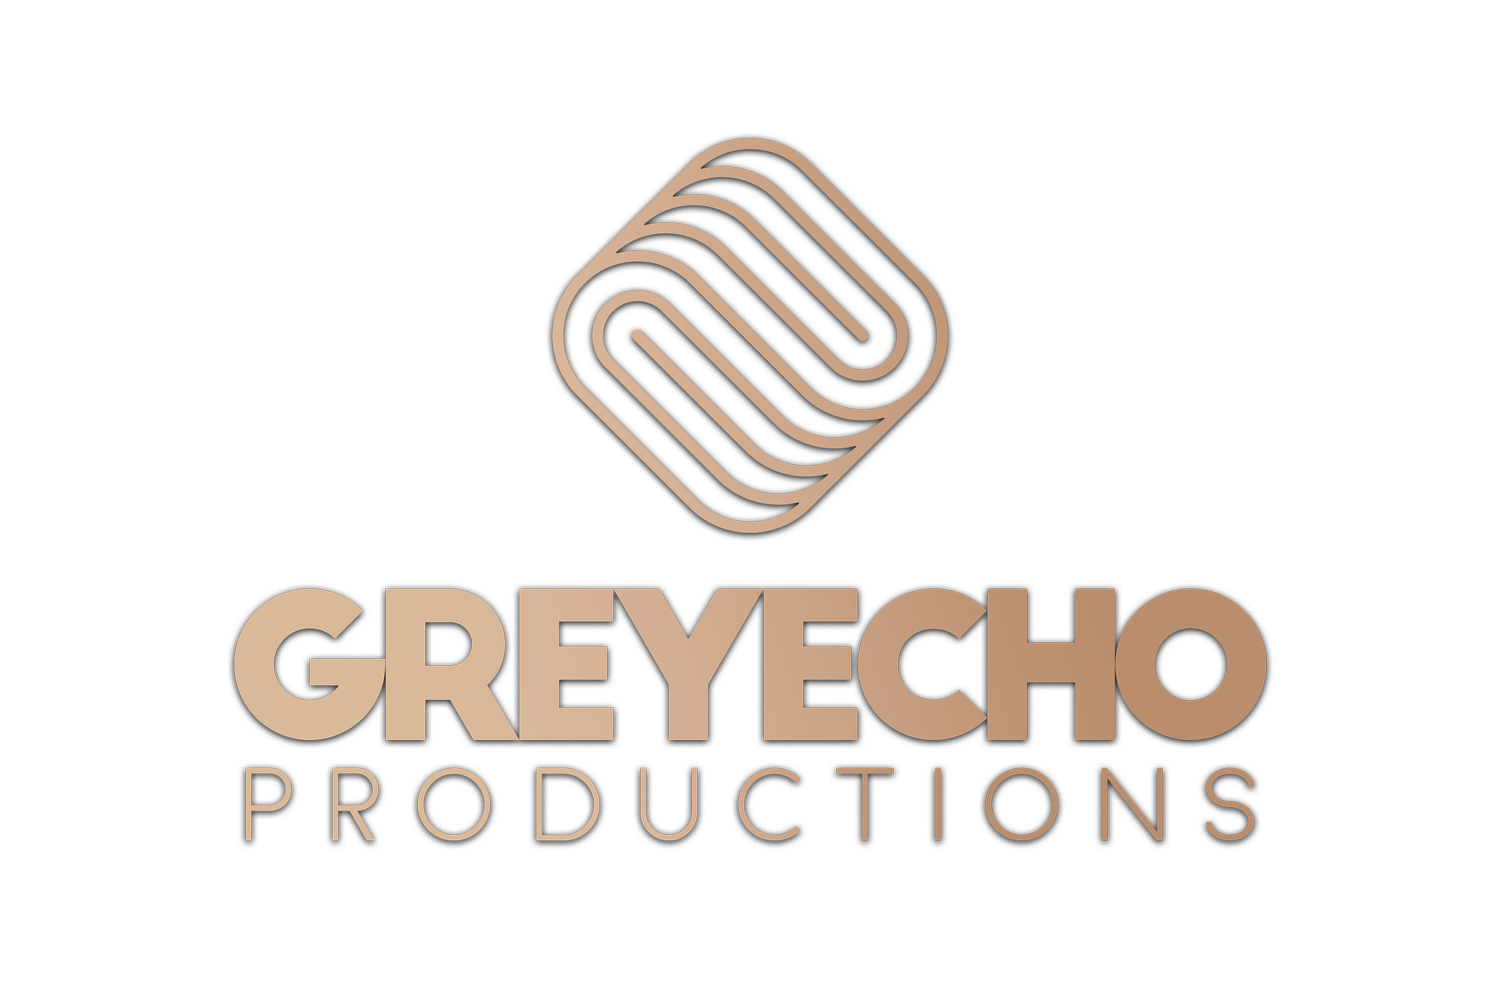 Grey Echo Productions